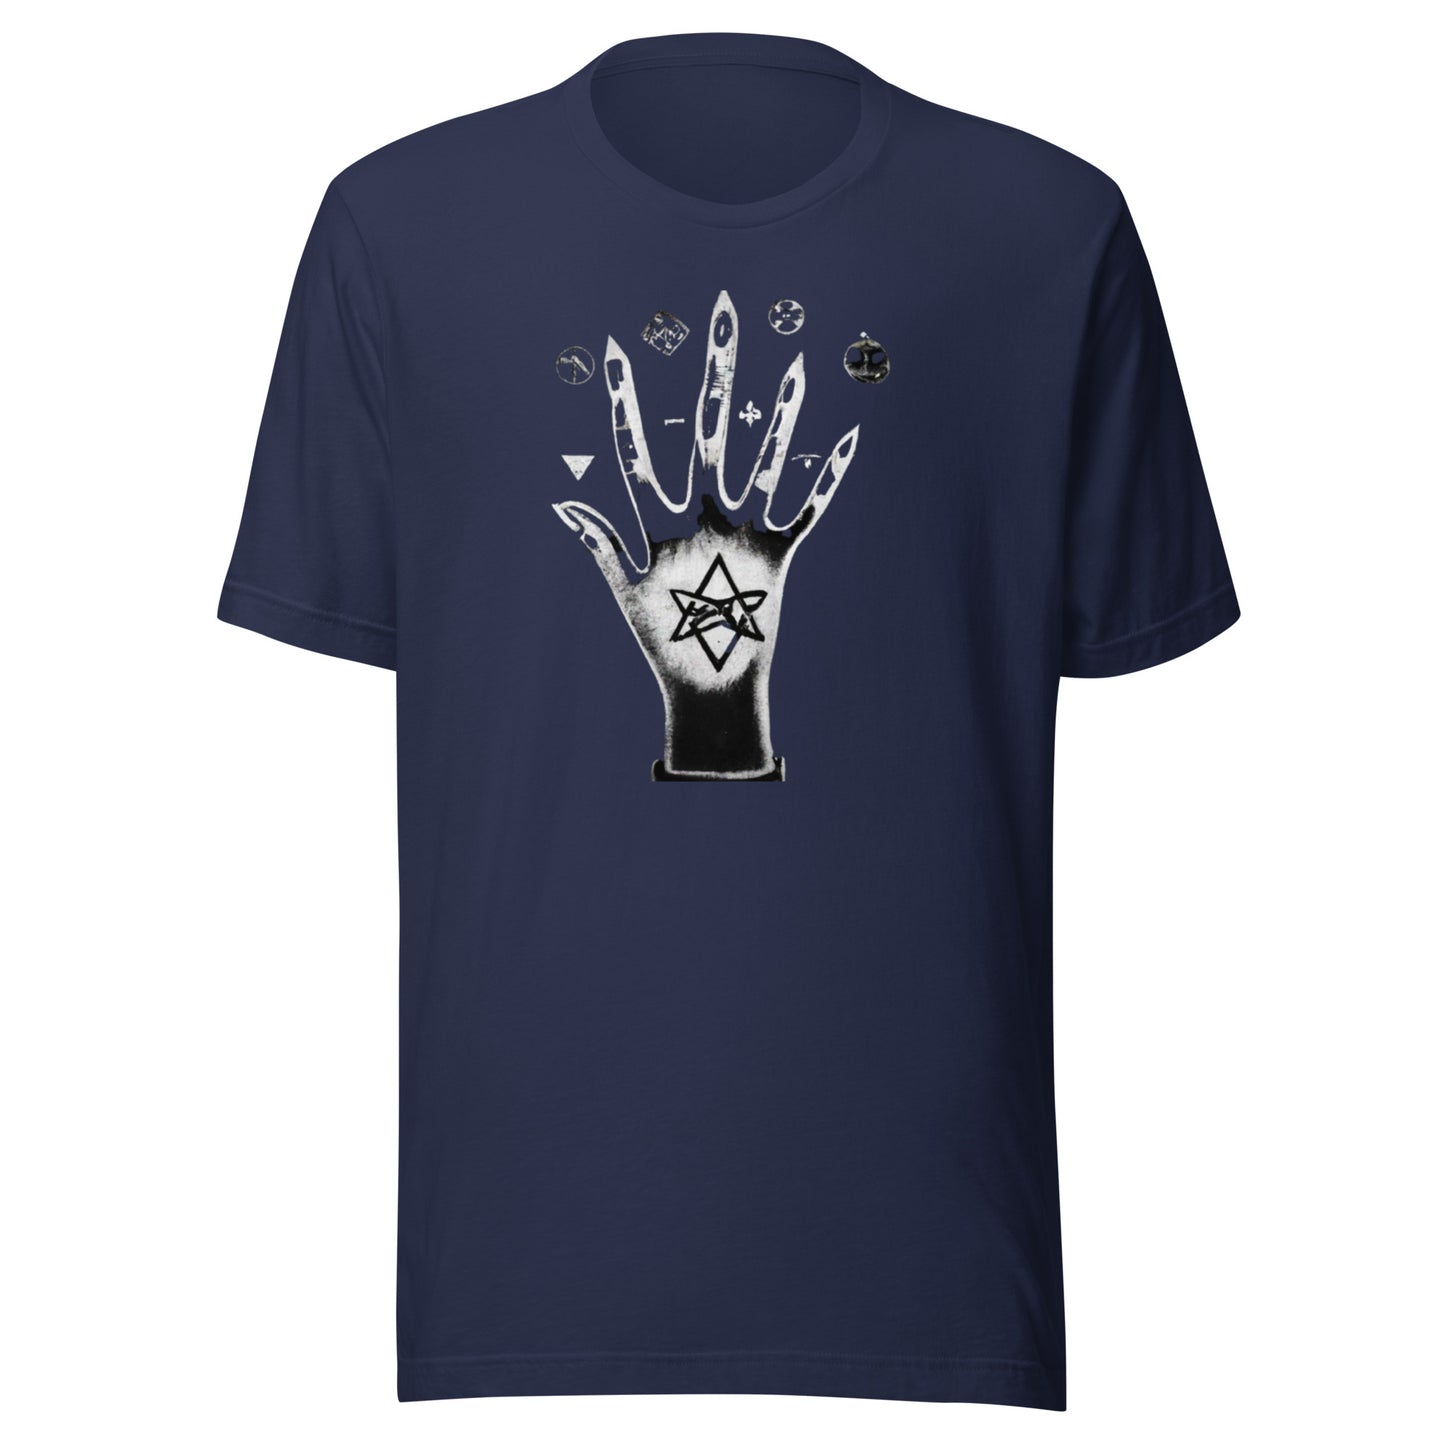 Which Hand 32 - Unisex t-shirt